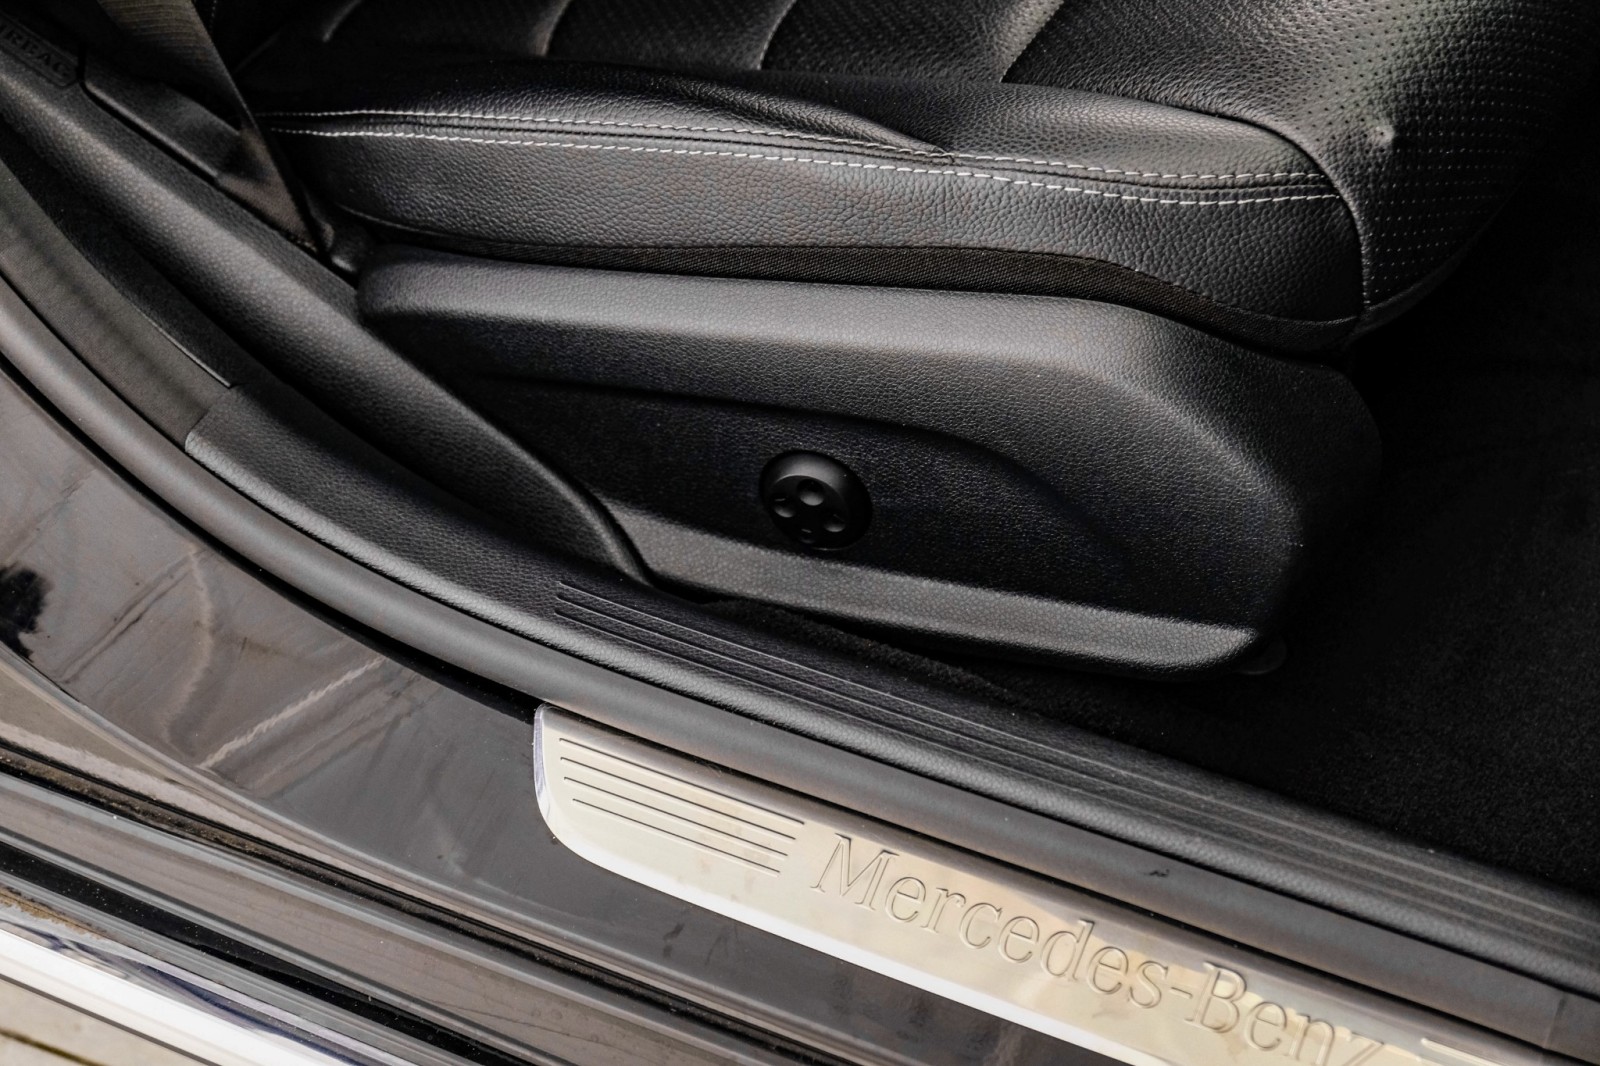 2015 Mercedes-Benz C300 SPORT BLIND SPOT ASSIST NAVIGATION LEATHER SEATS R 34